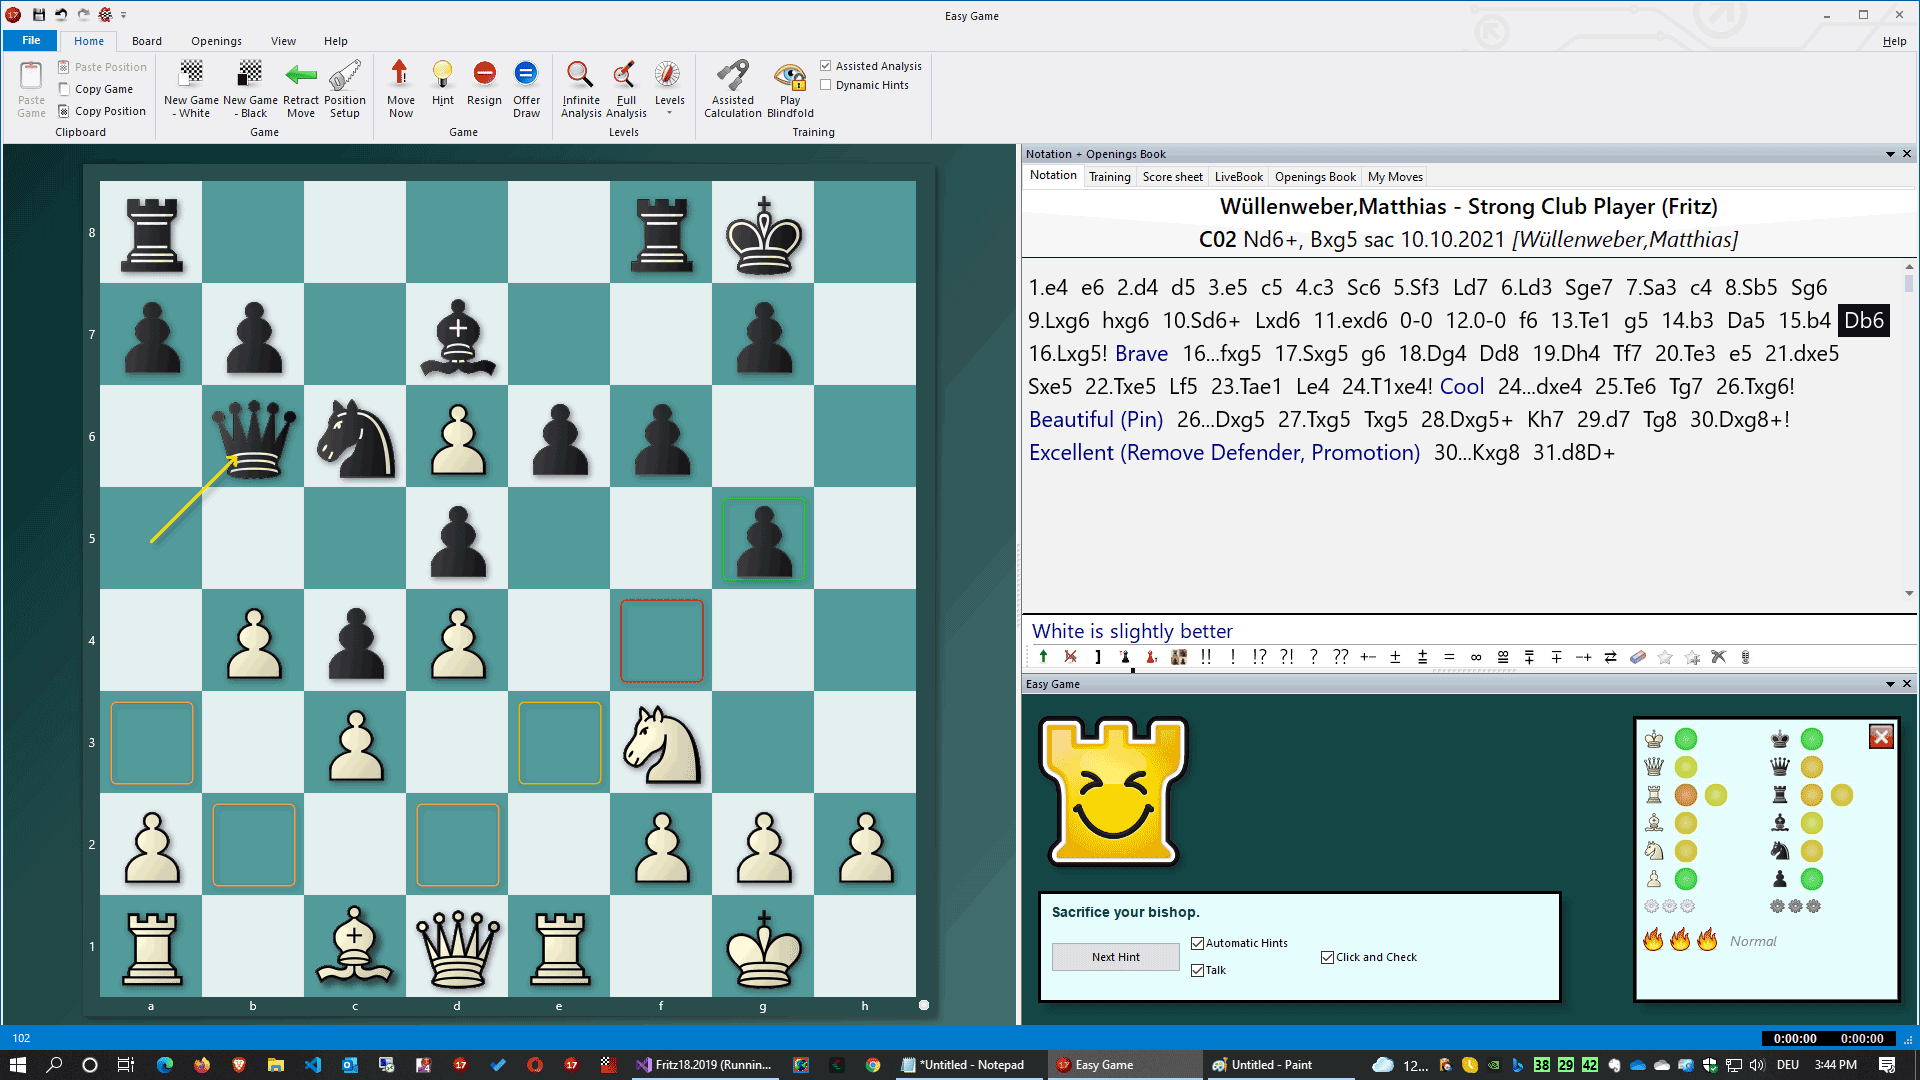 Fritz13 instant chess game analysis (Fritz Tip #0020) 